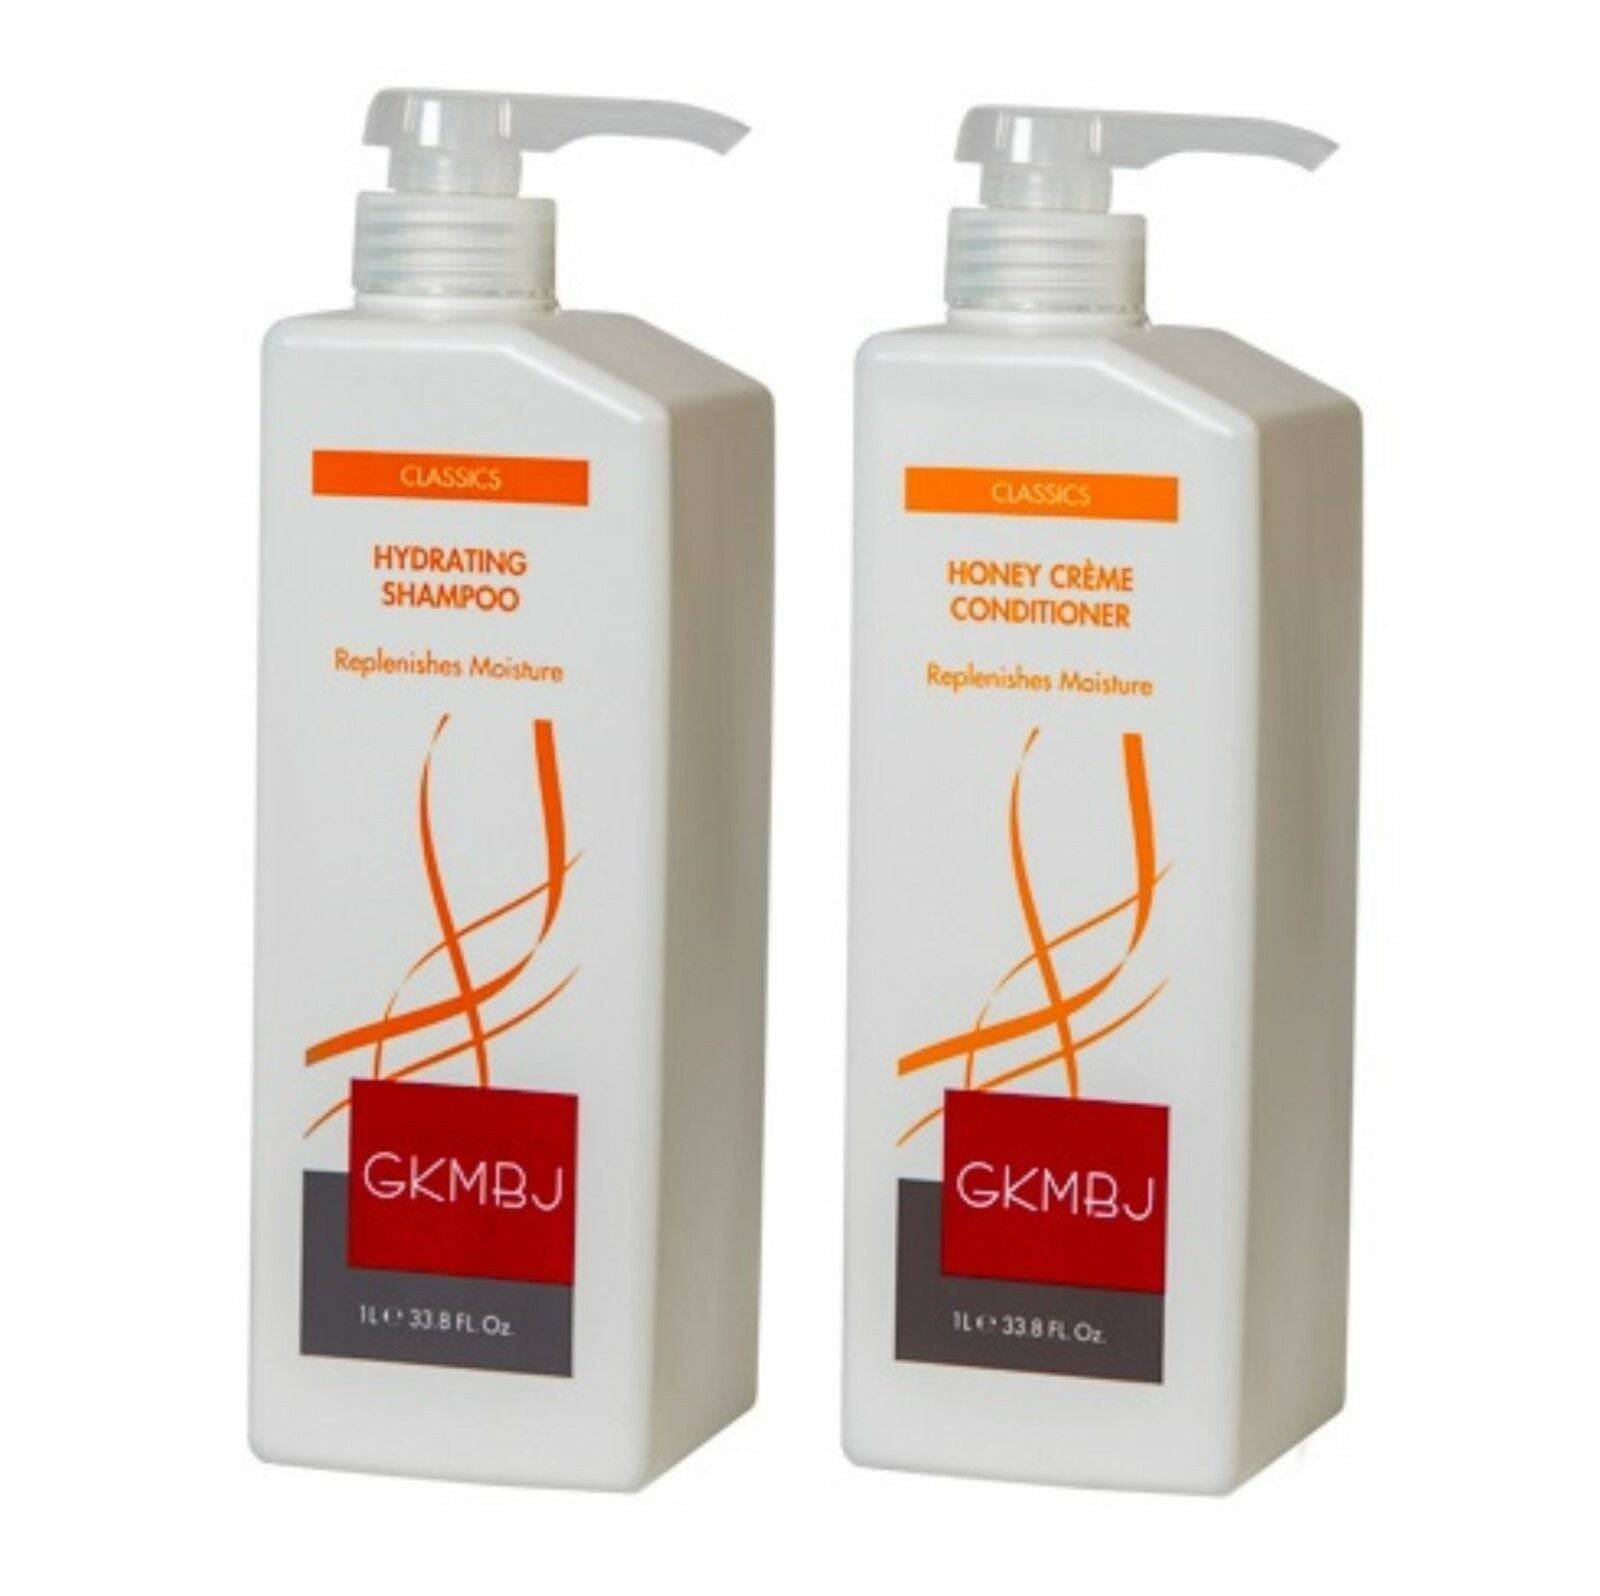 GKMBJ Hydrating Shampoo & Honey Creme Conditioner 1lt each Replenishes  Moisture - On Line Hair Depot